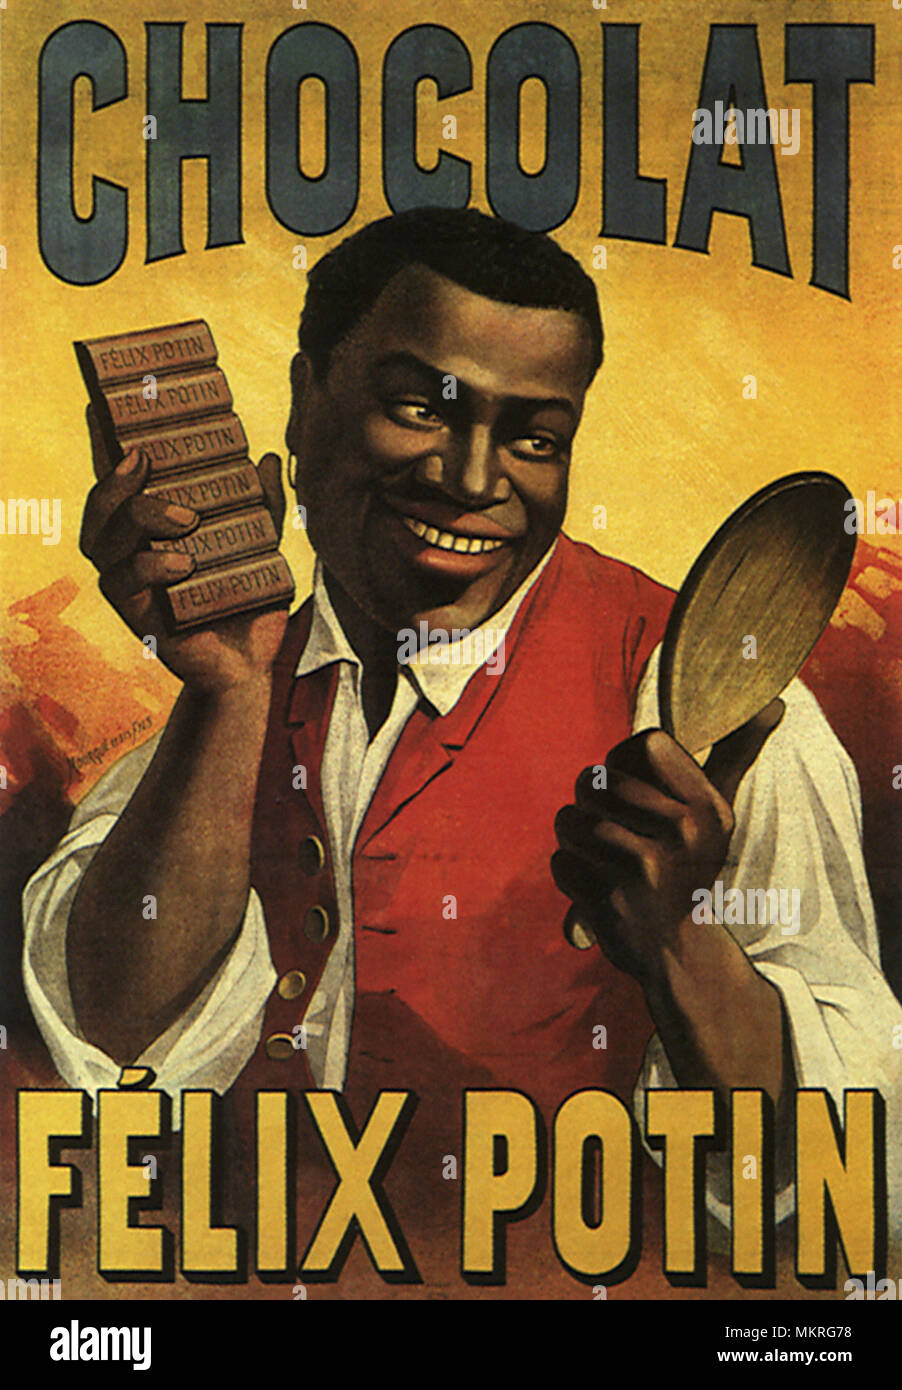 Affiche Chocolat belge